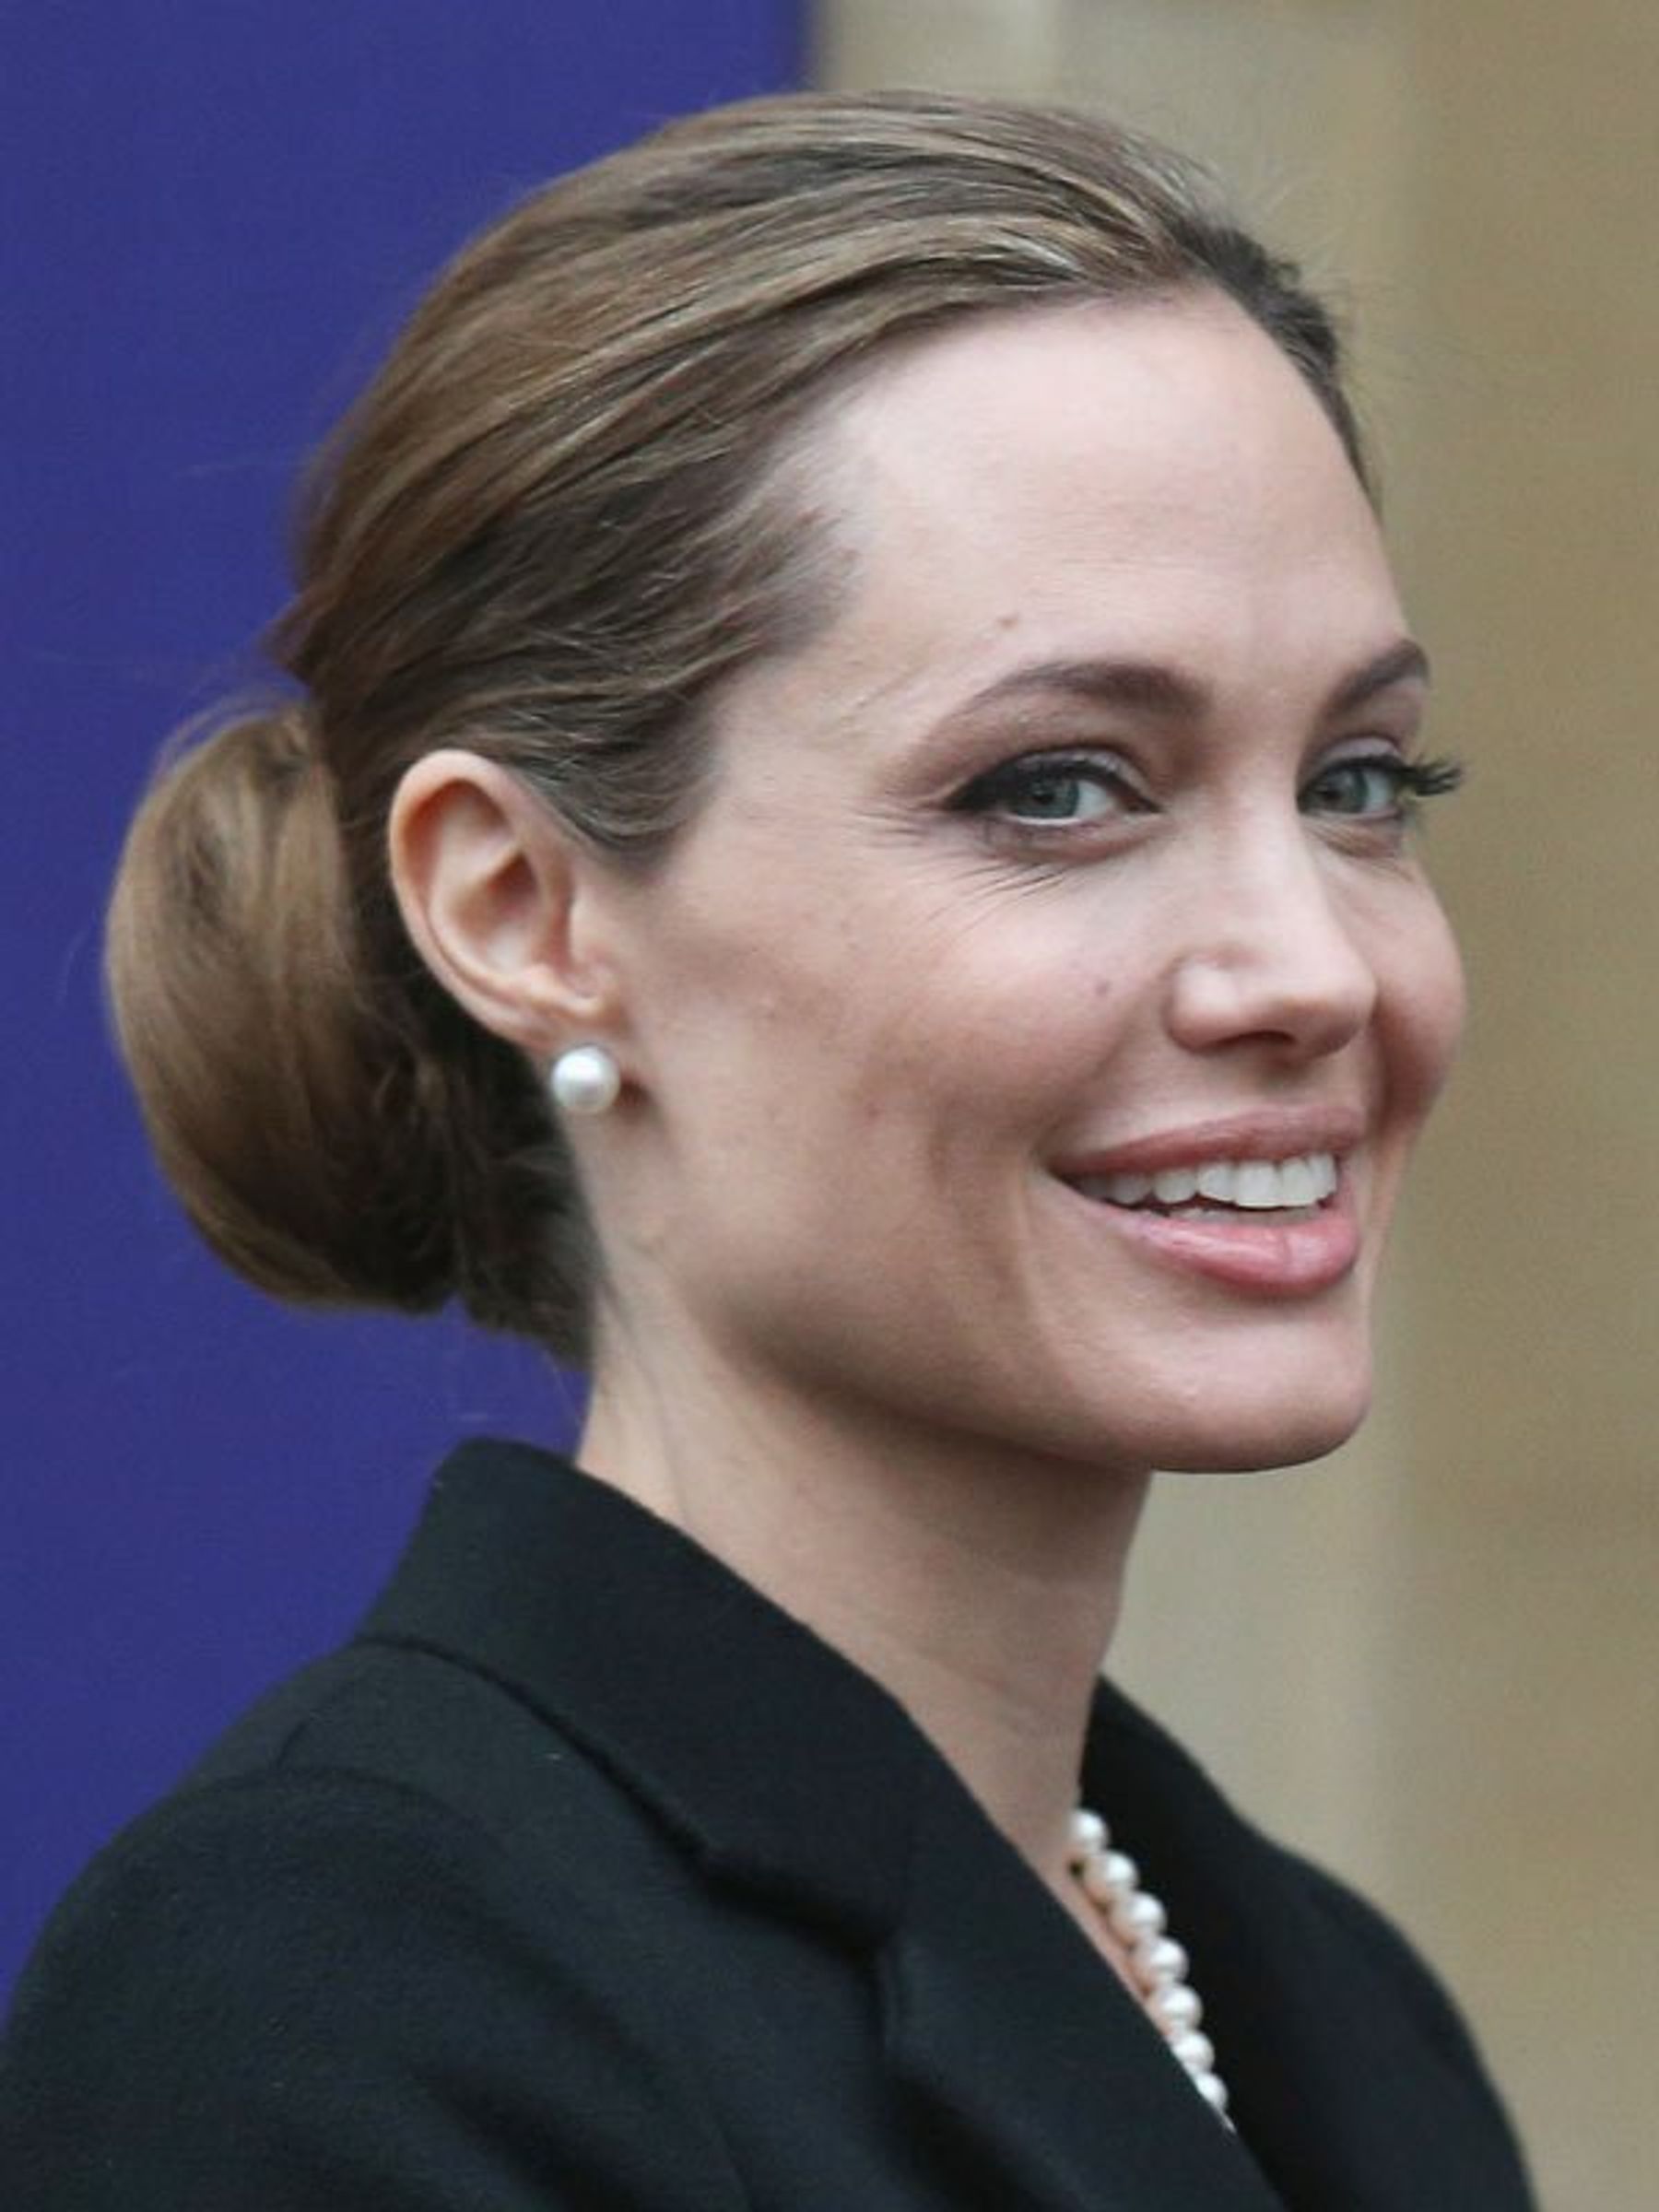 Angelina Jolie wearing pearls with no makeup at awards night 2011